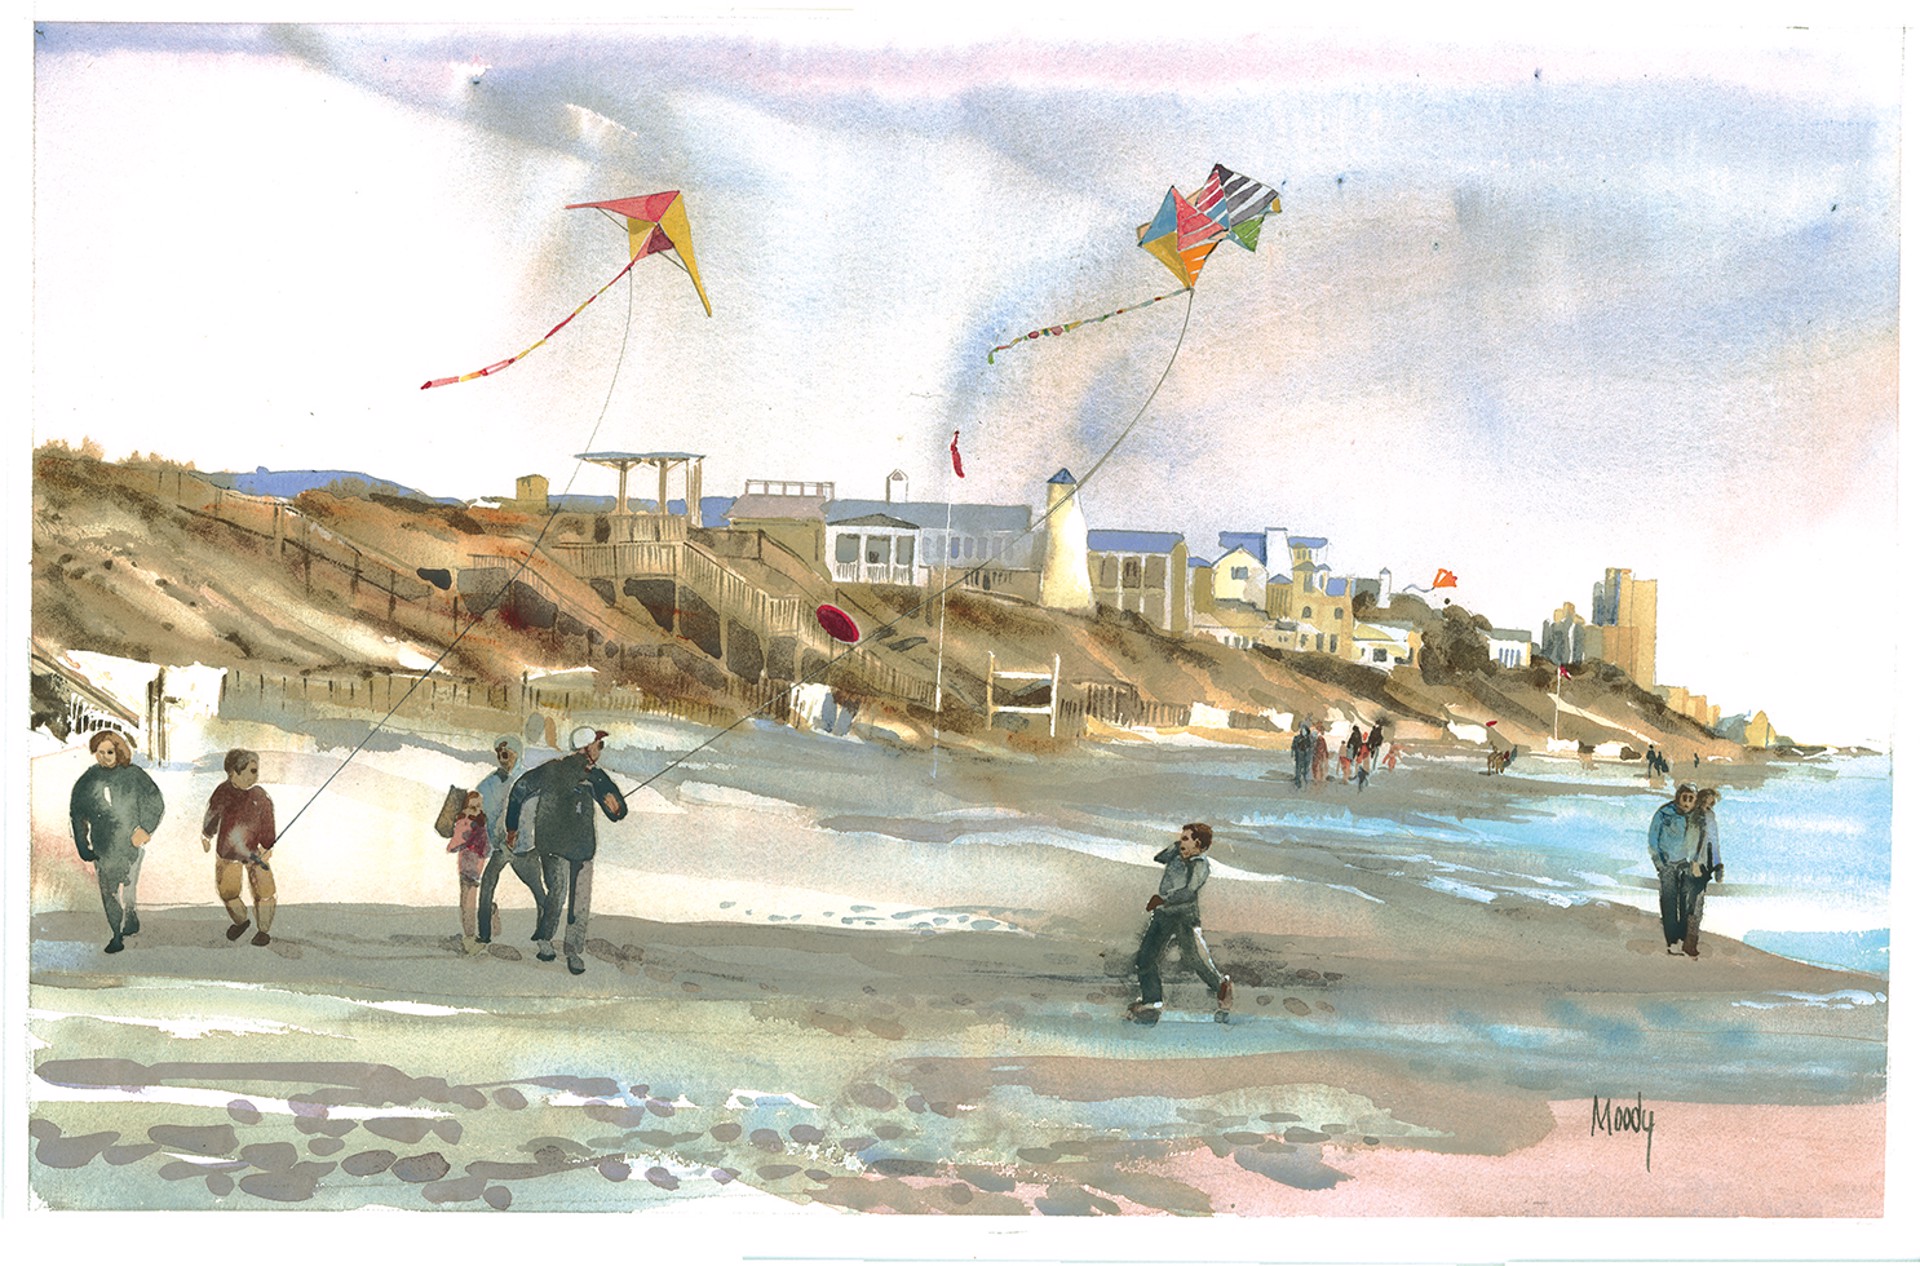 Seaside Kite Flying by Bob Moody